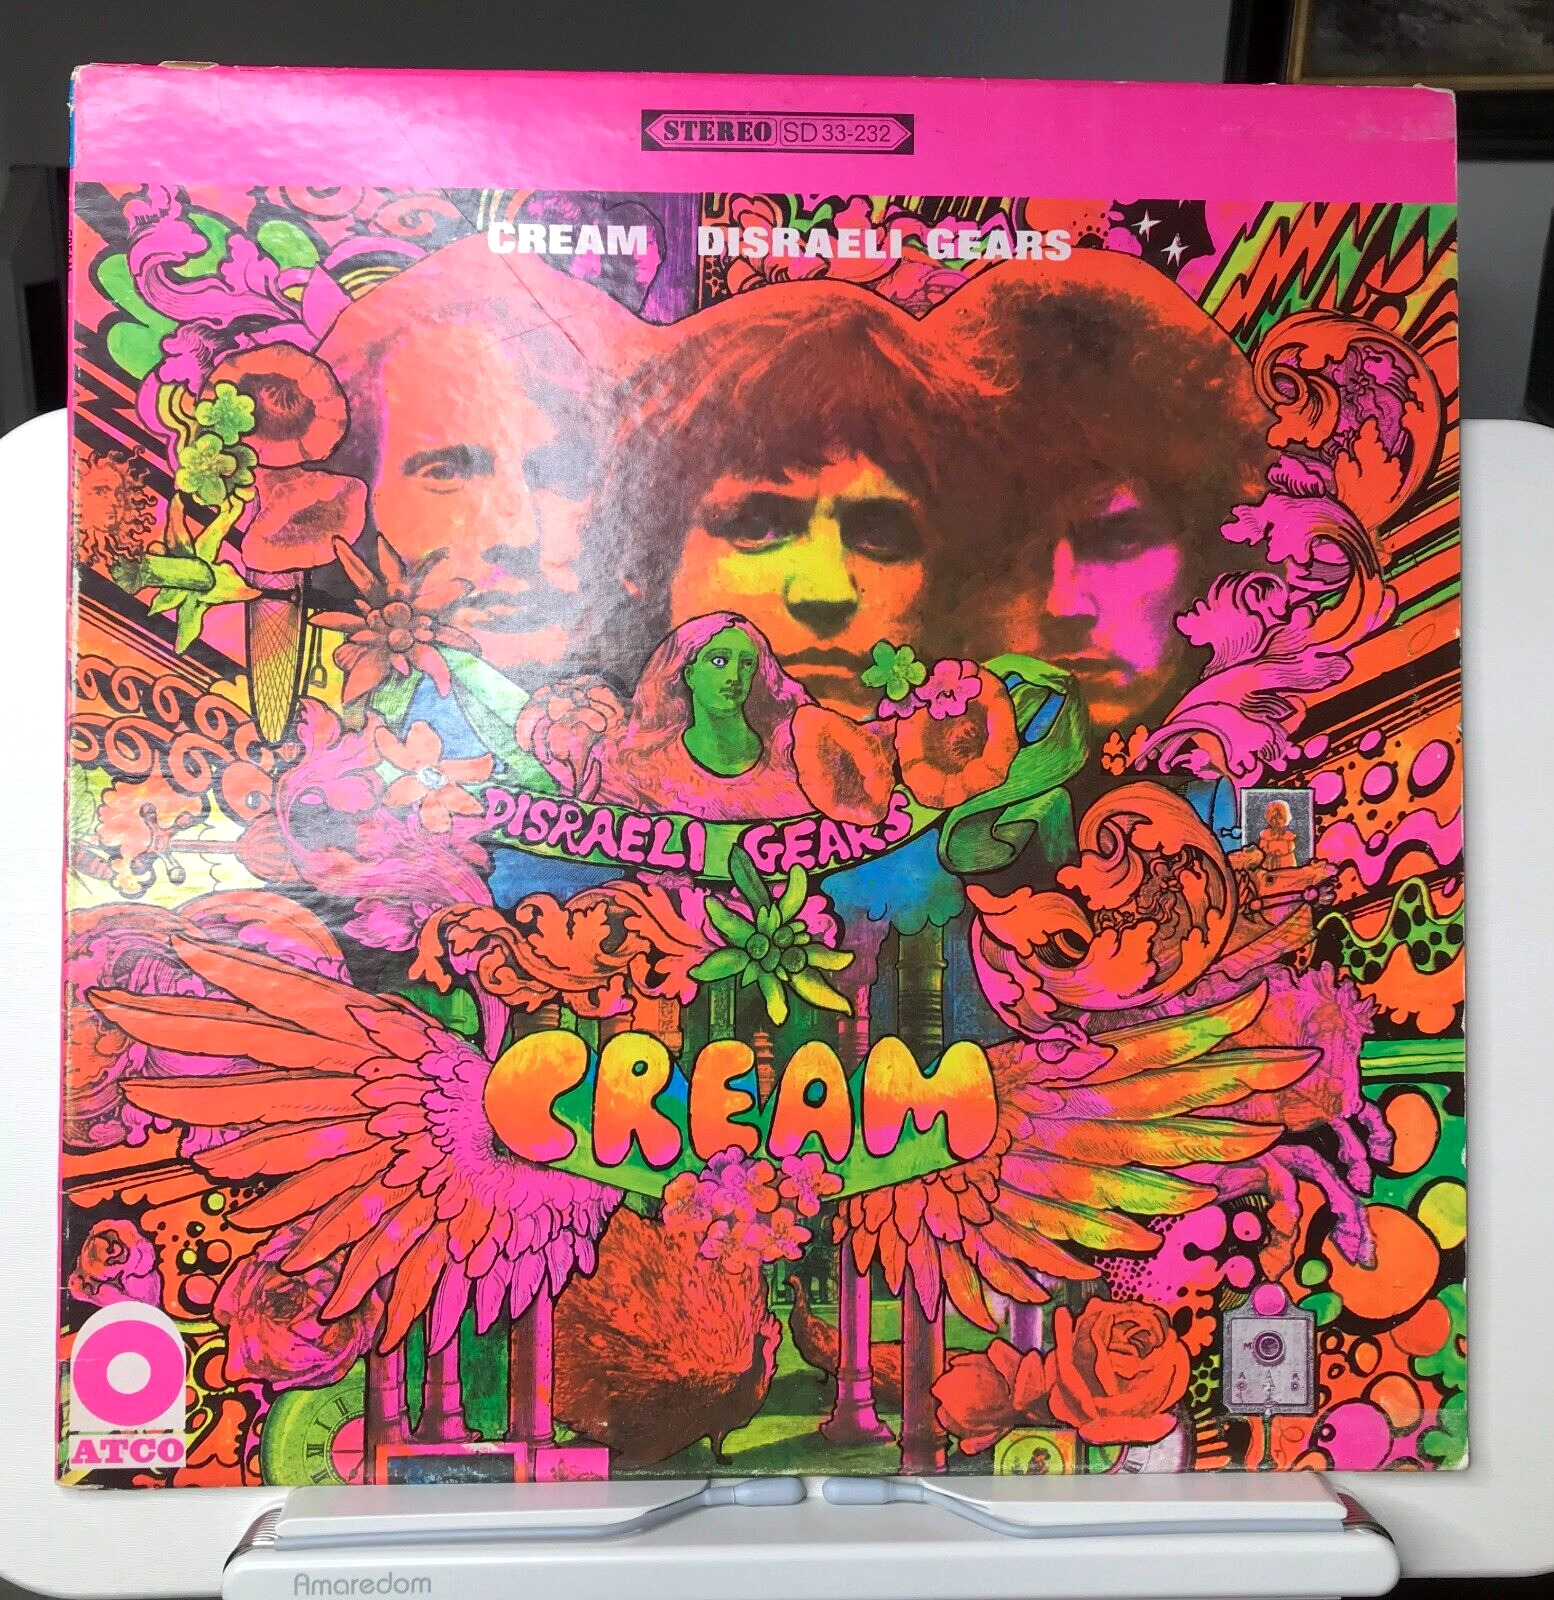 Tested: Cream – Disraeli Gears - 1967 Blues Rock Stereo LP